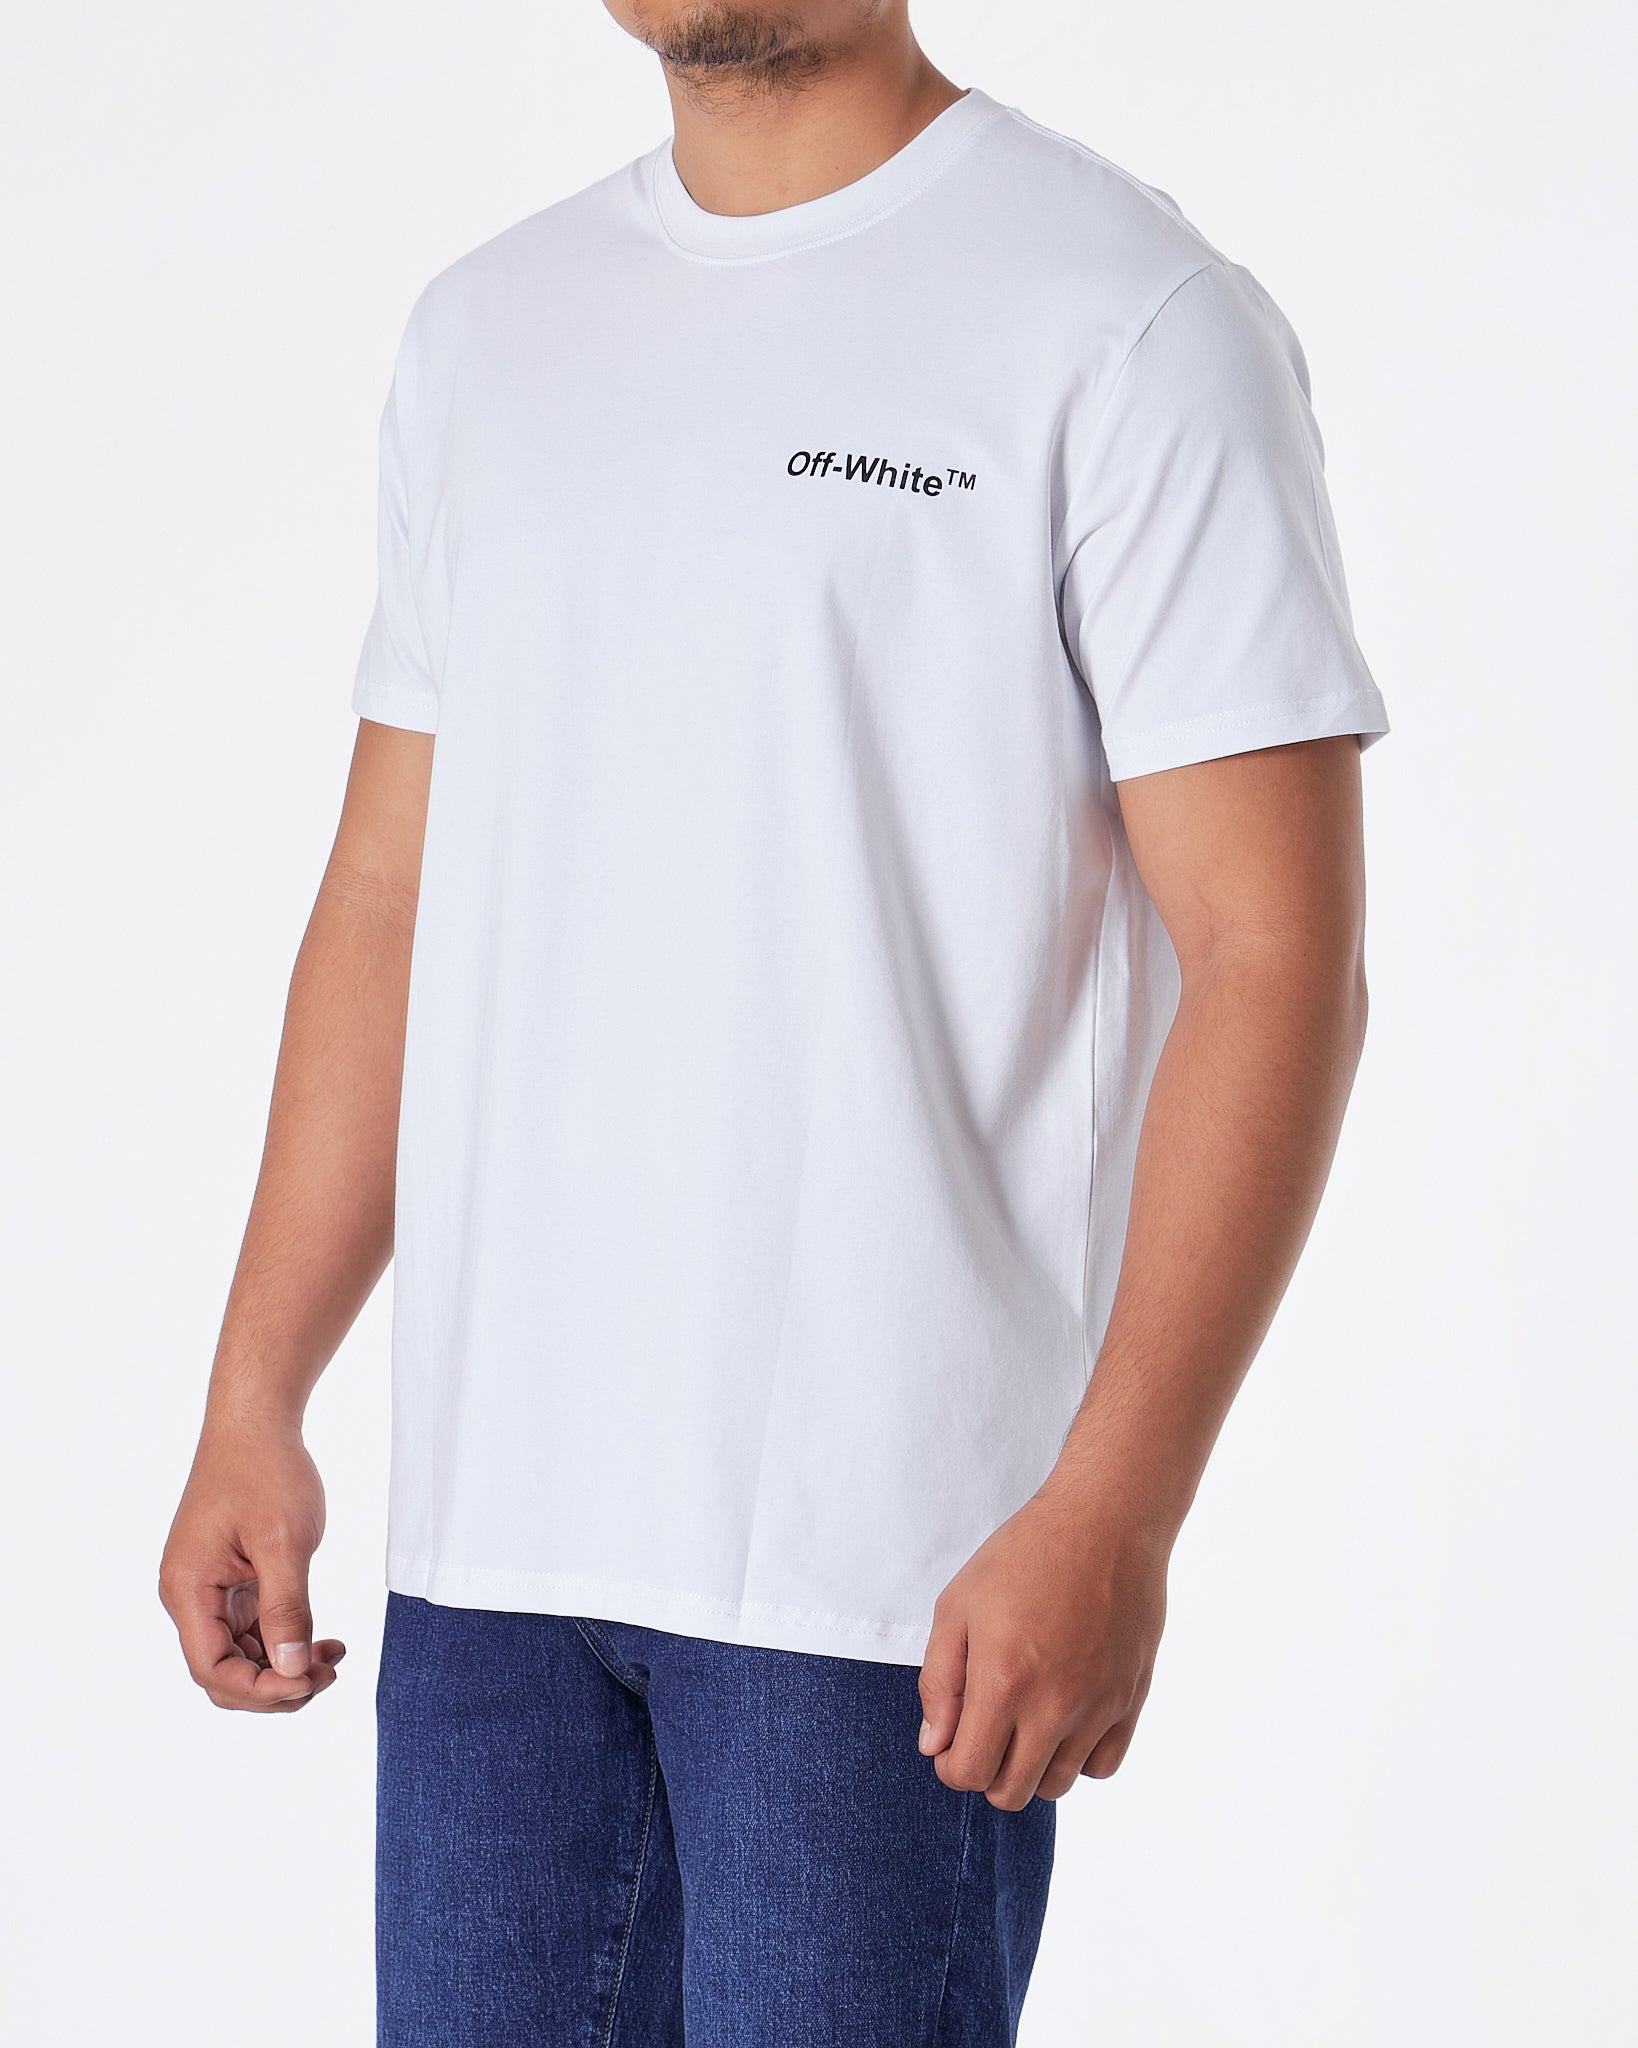 MOI OUTFIT-OW Cross Back Arrow Men White T-Shirt 16.90